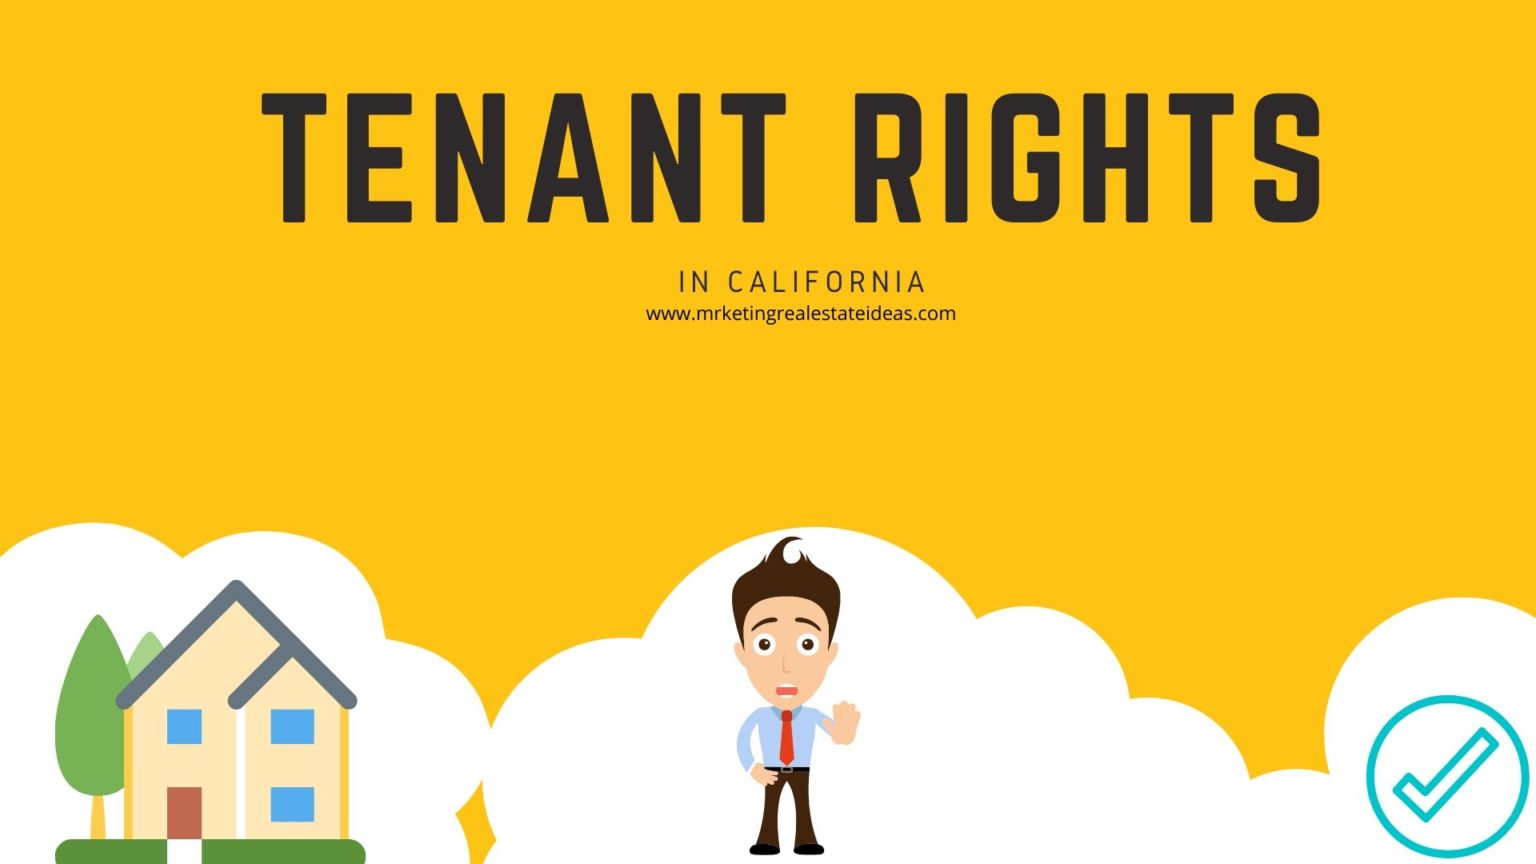 Tenant Rights in California 2020 LandlordTenant Loss